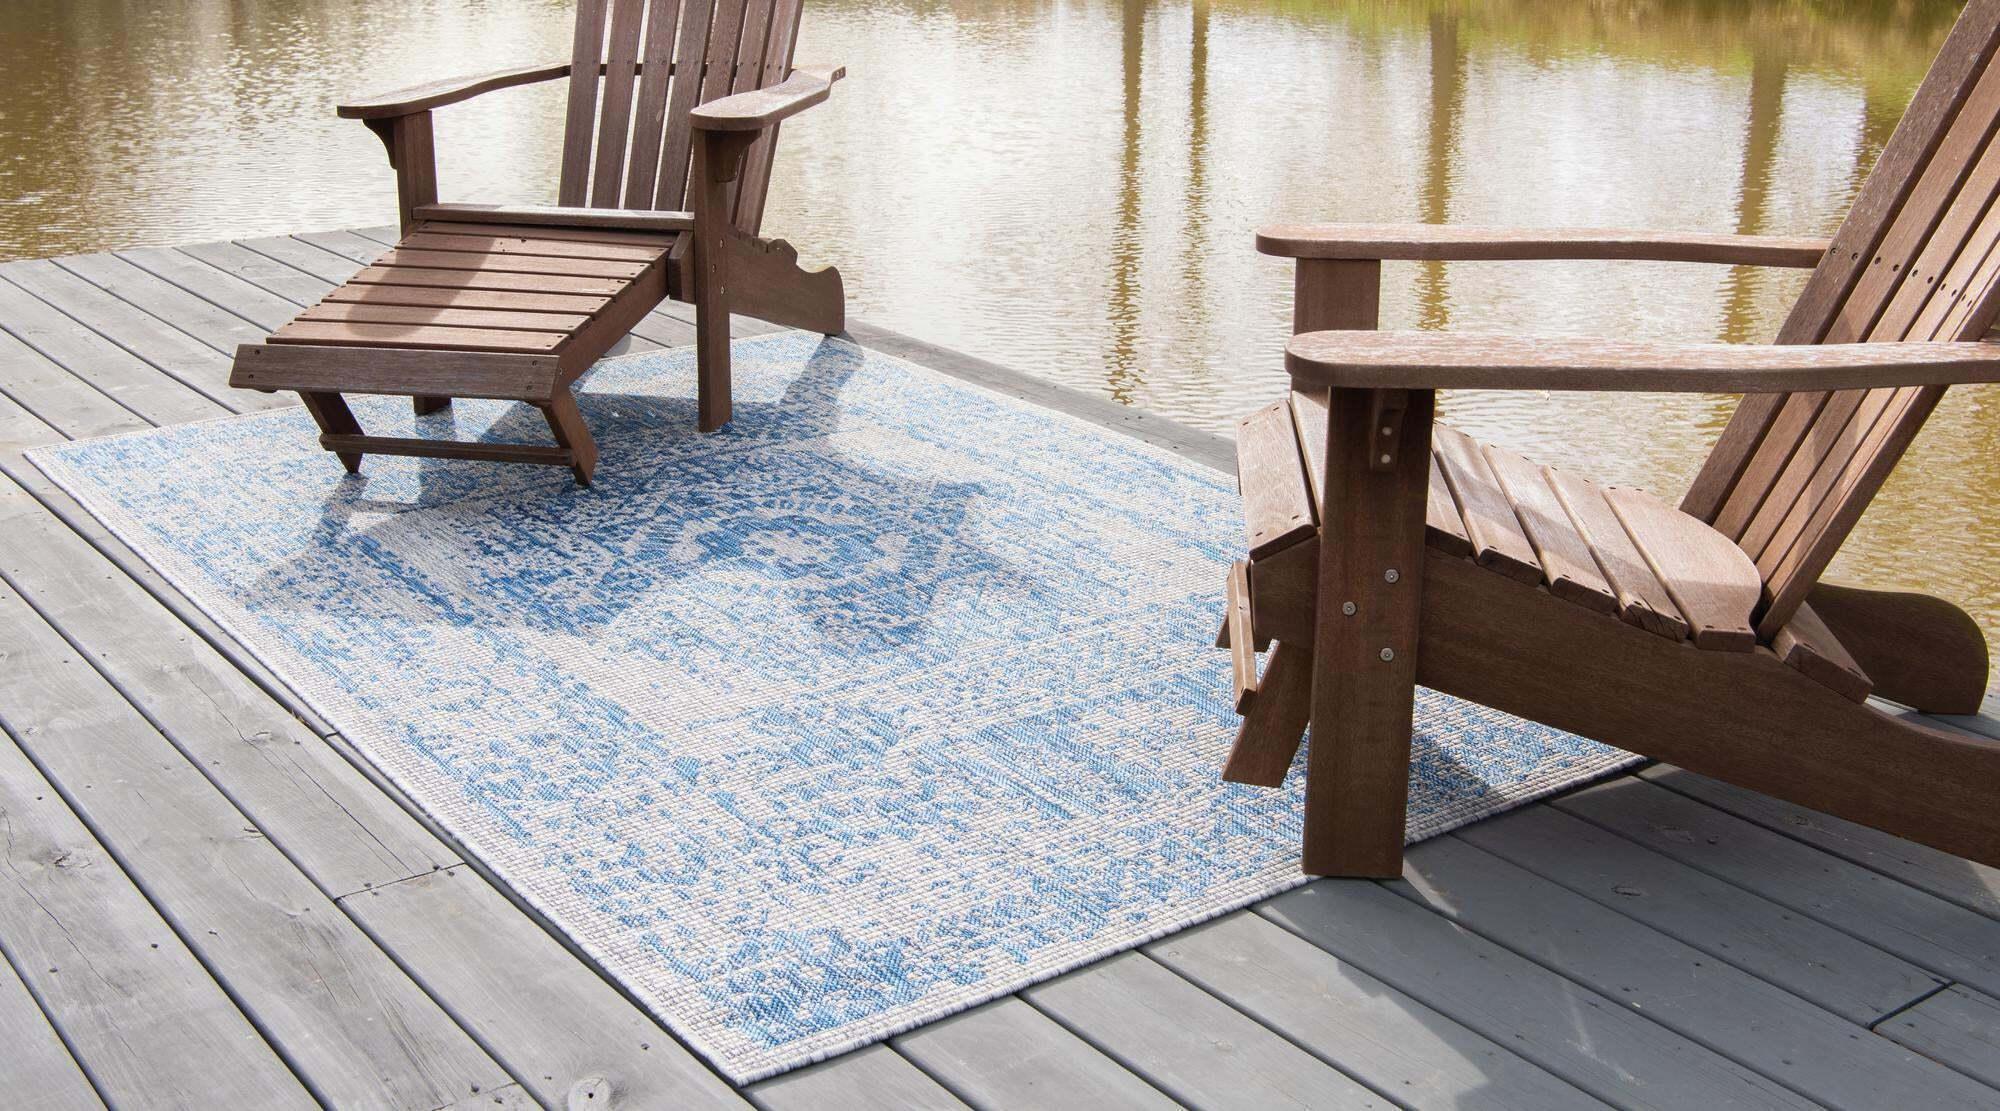 Unique Loom Outdoor Rugs - Outdoor Traditional Geometric 9x12 Rug Blue & Multicolor